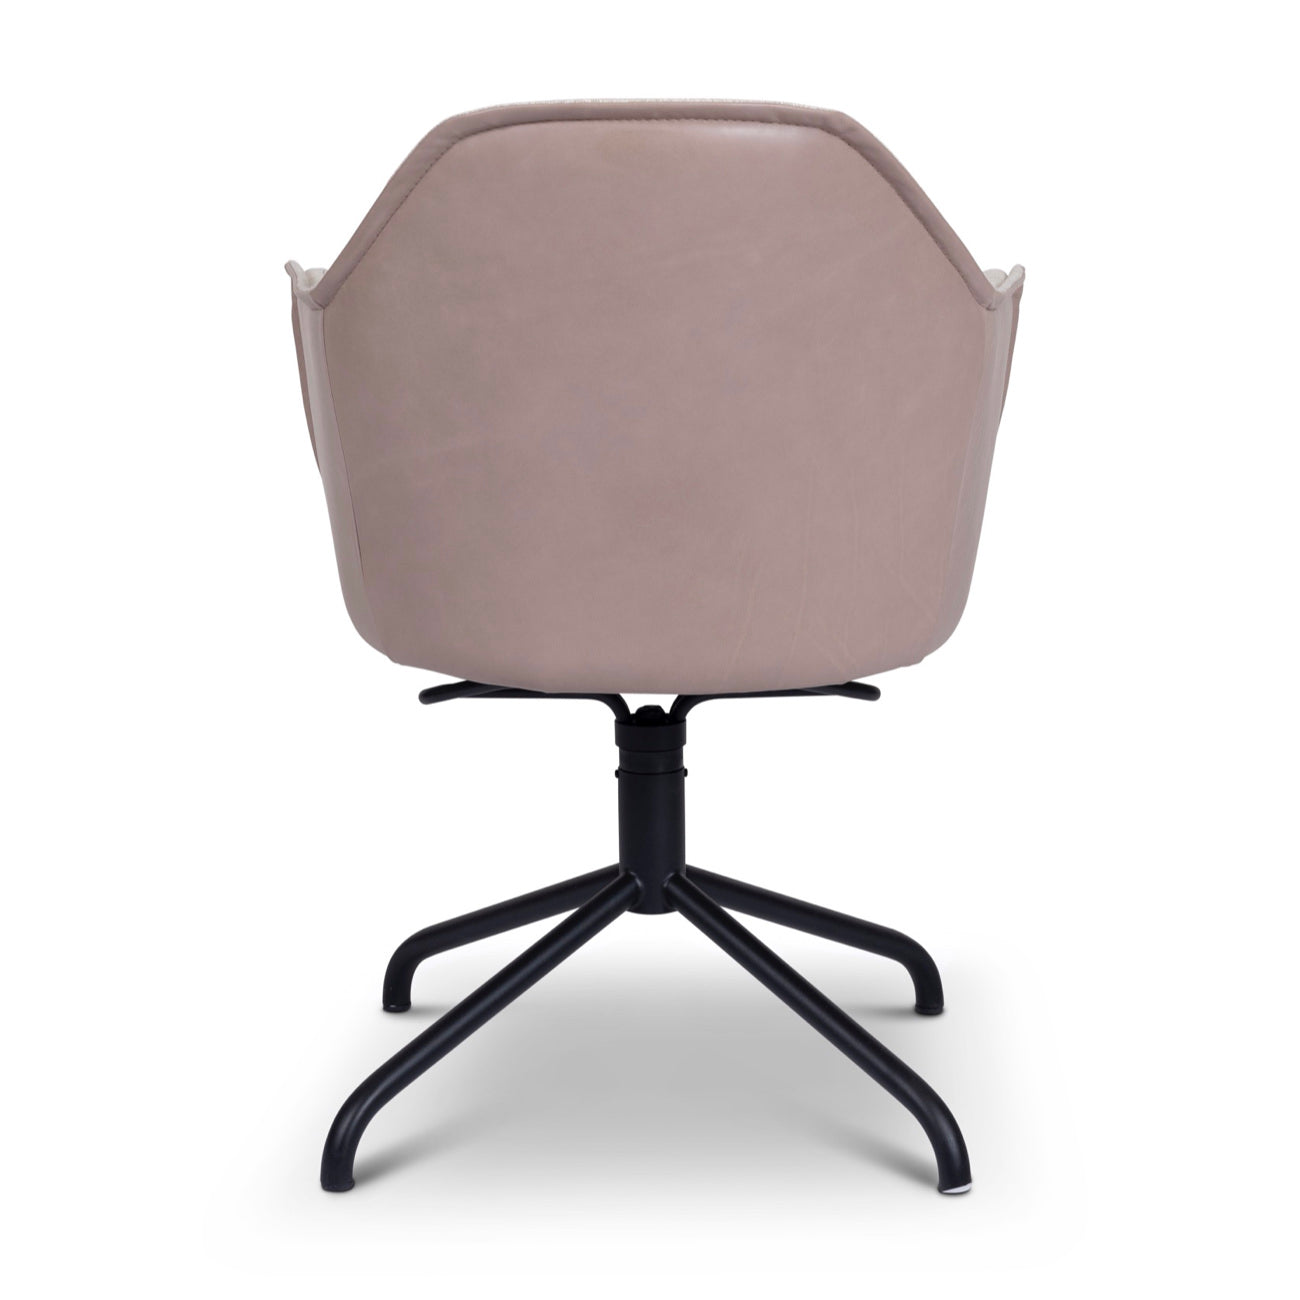 SOPHIE chair by Christine Kröncke Interior Design